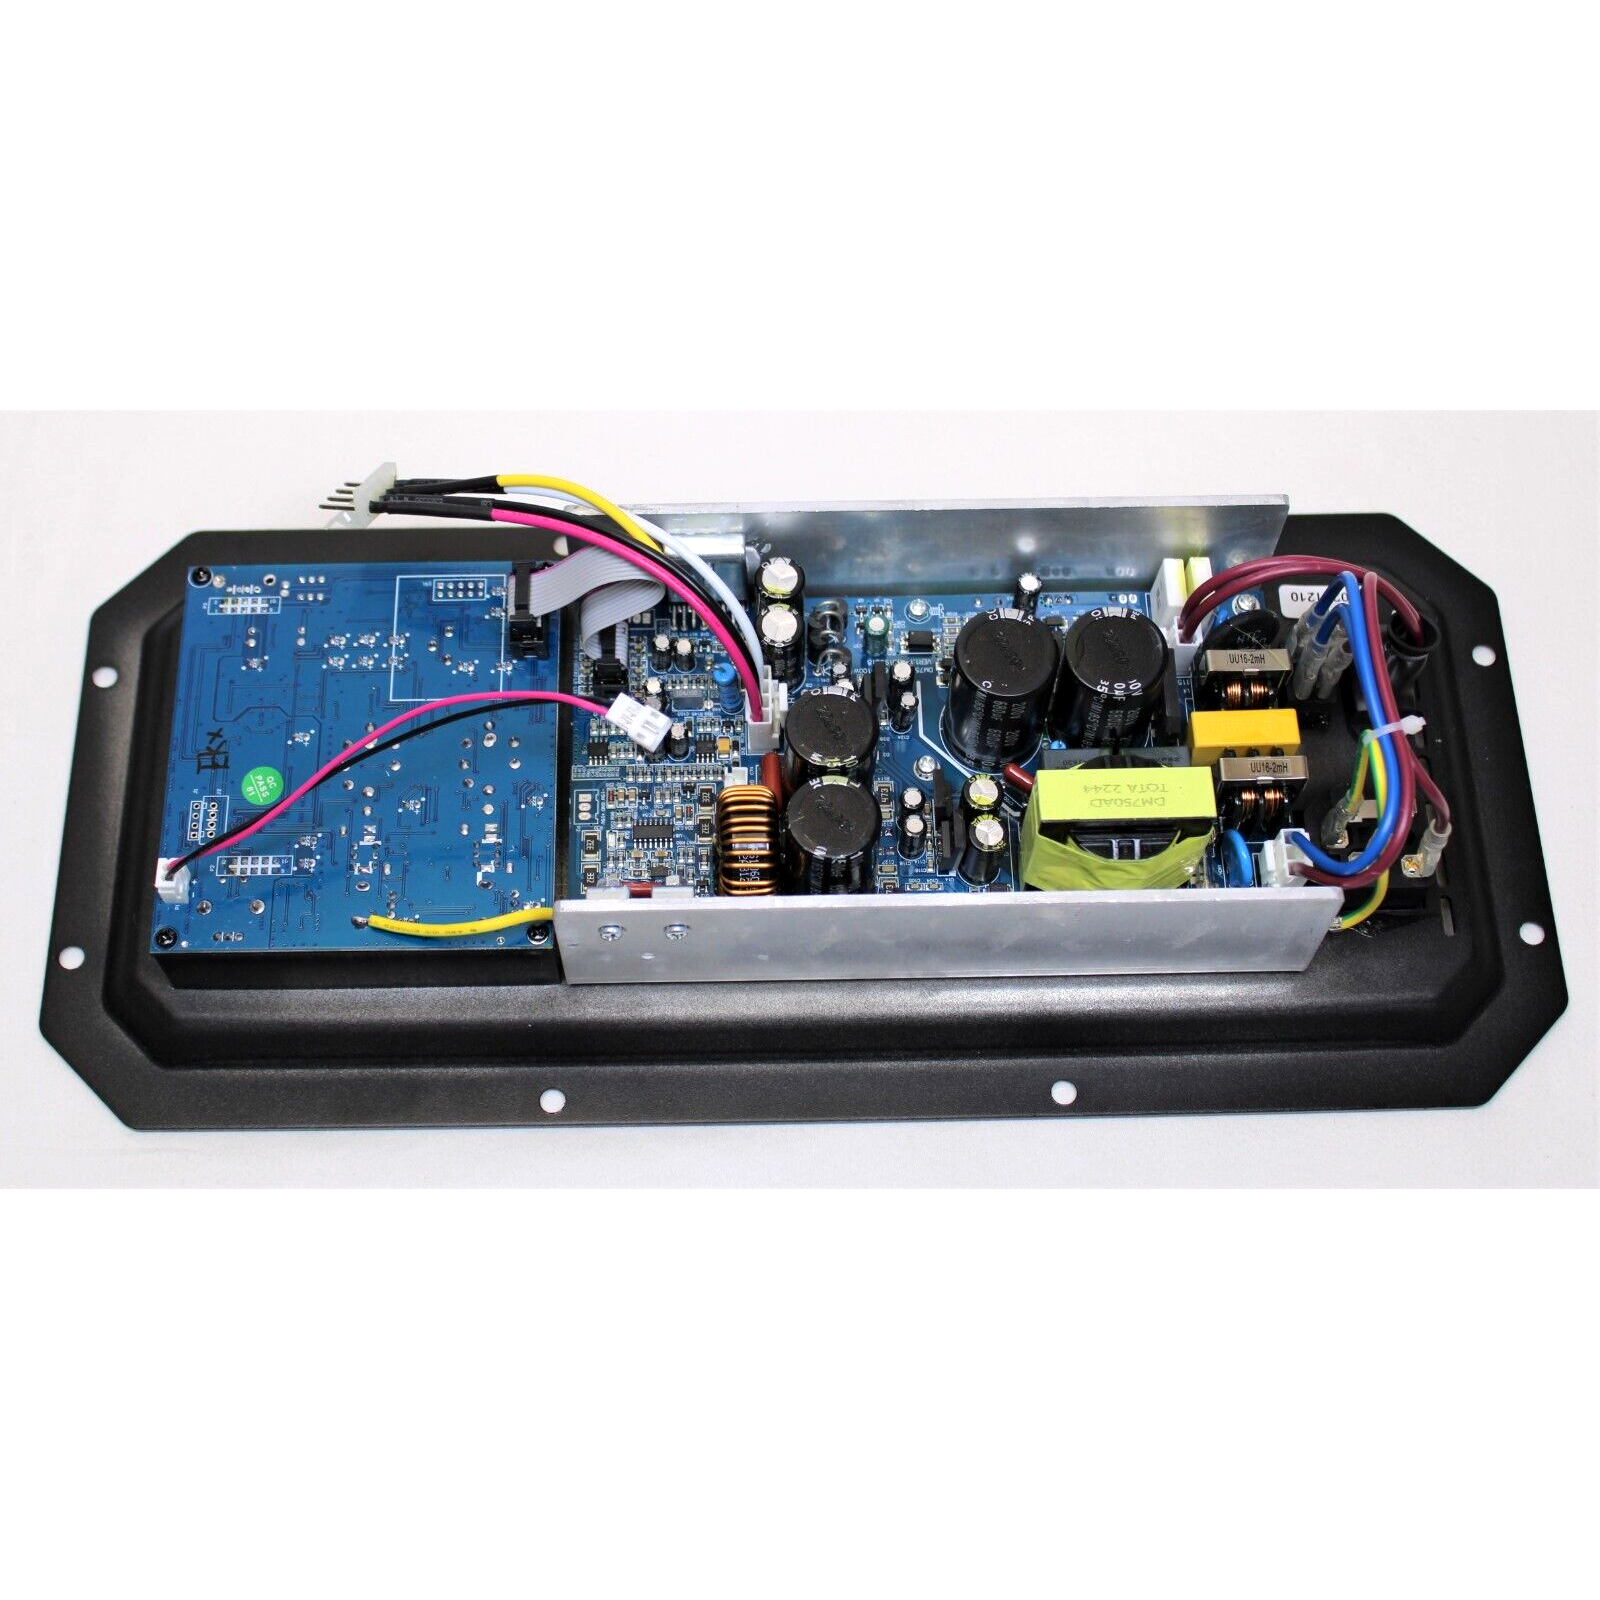 LASE Replacement EV ElectroVoice Amplifier Modules